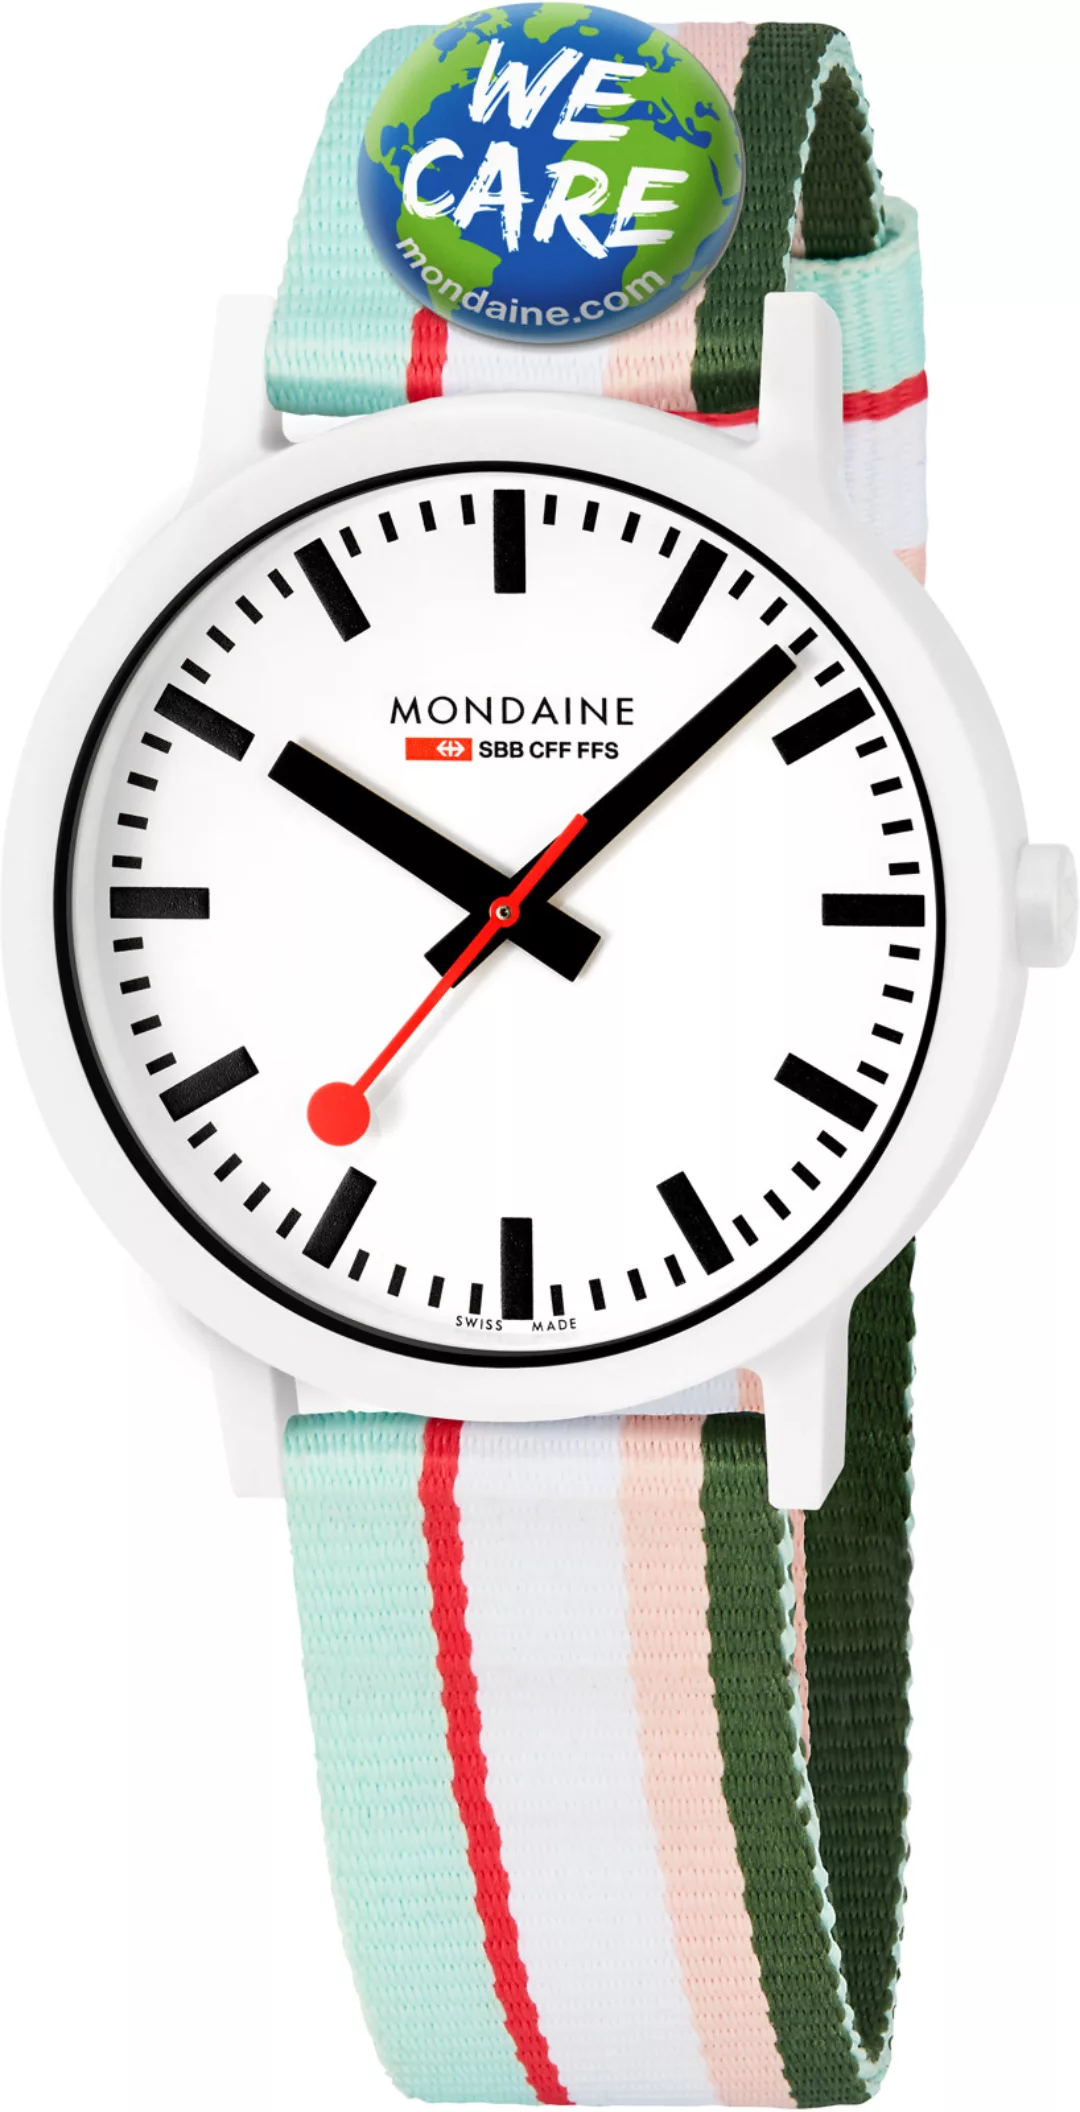 Mondaine essence 41 mm - We care MS1.41110.LF Armbanduhr günstig online kaufen